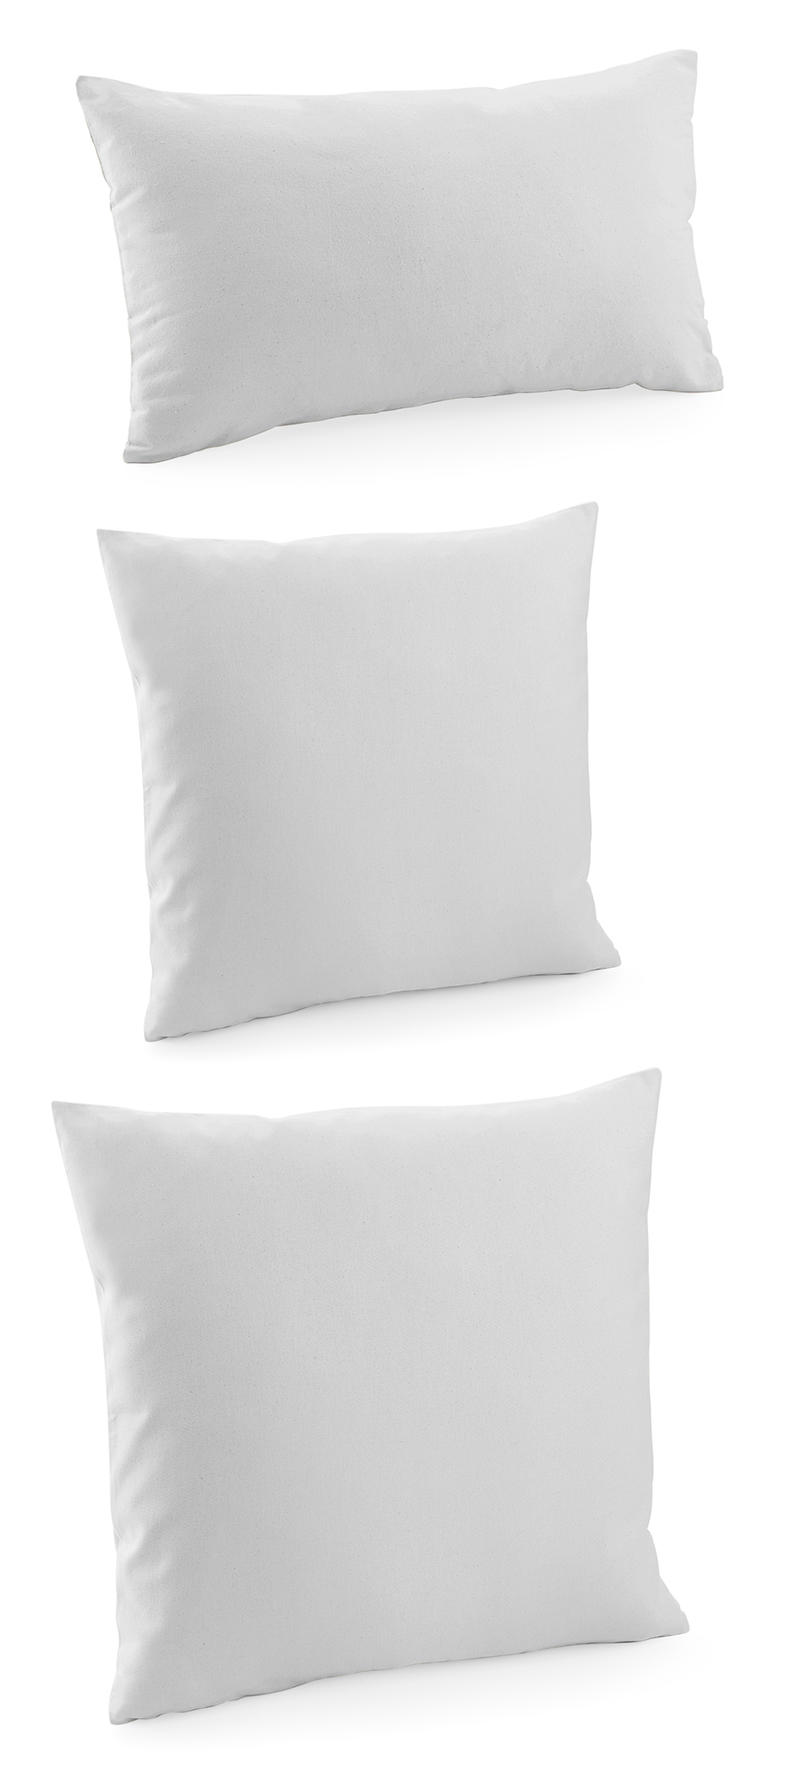  Fairtrade Cotton Canvas Cushion Cover in Farbe Light Grey 